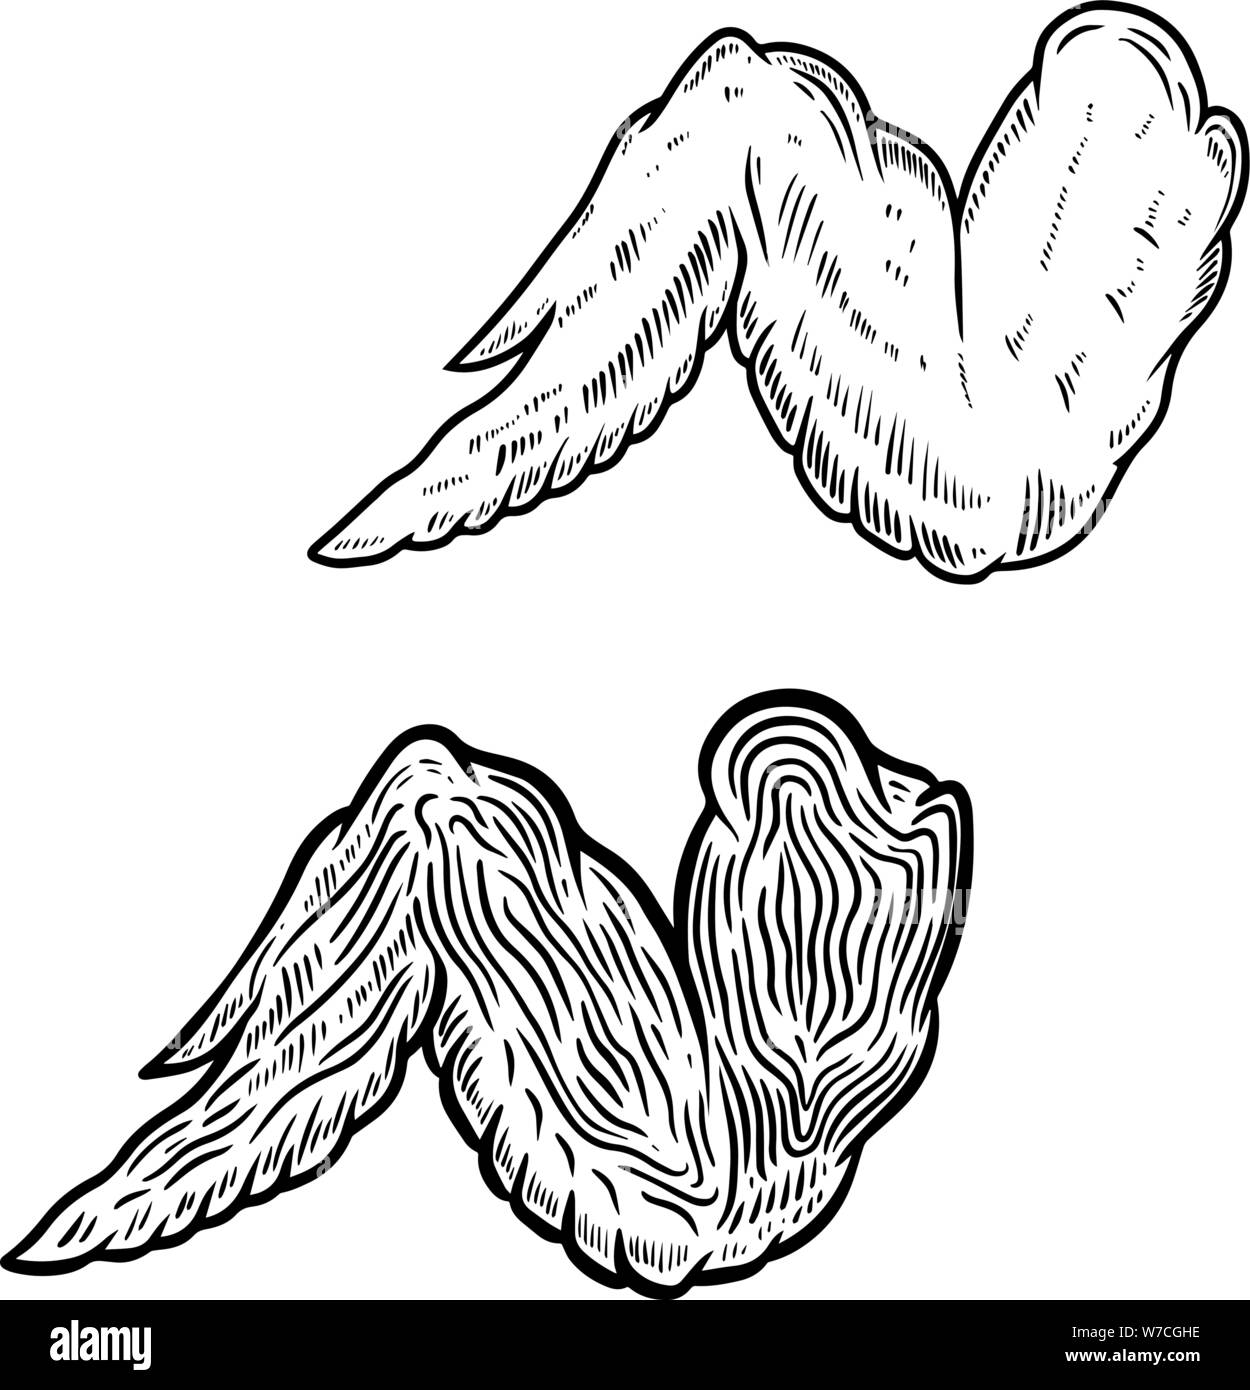 Hand Drawn Sketch Buffalo Chicken Wings Stock Vector (Royalty Free)  1012011985 | Shutterstock